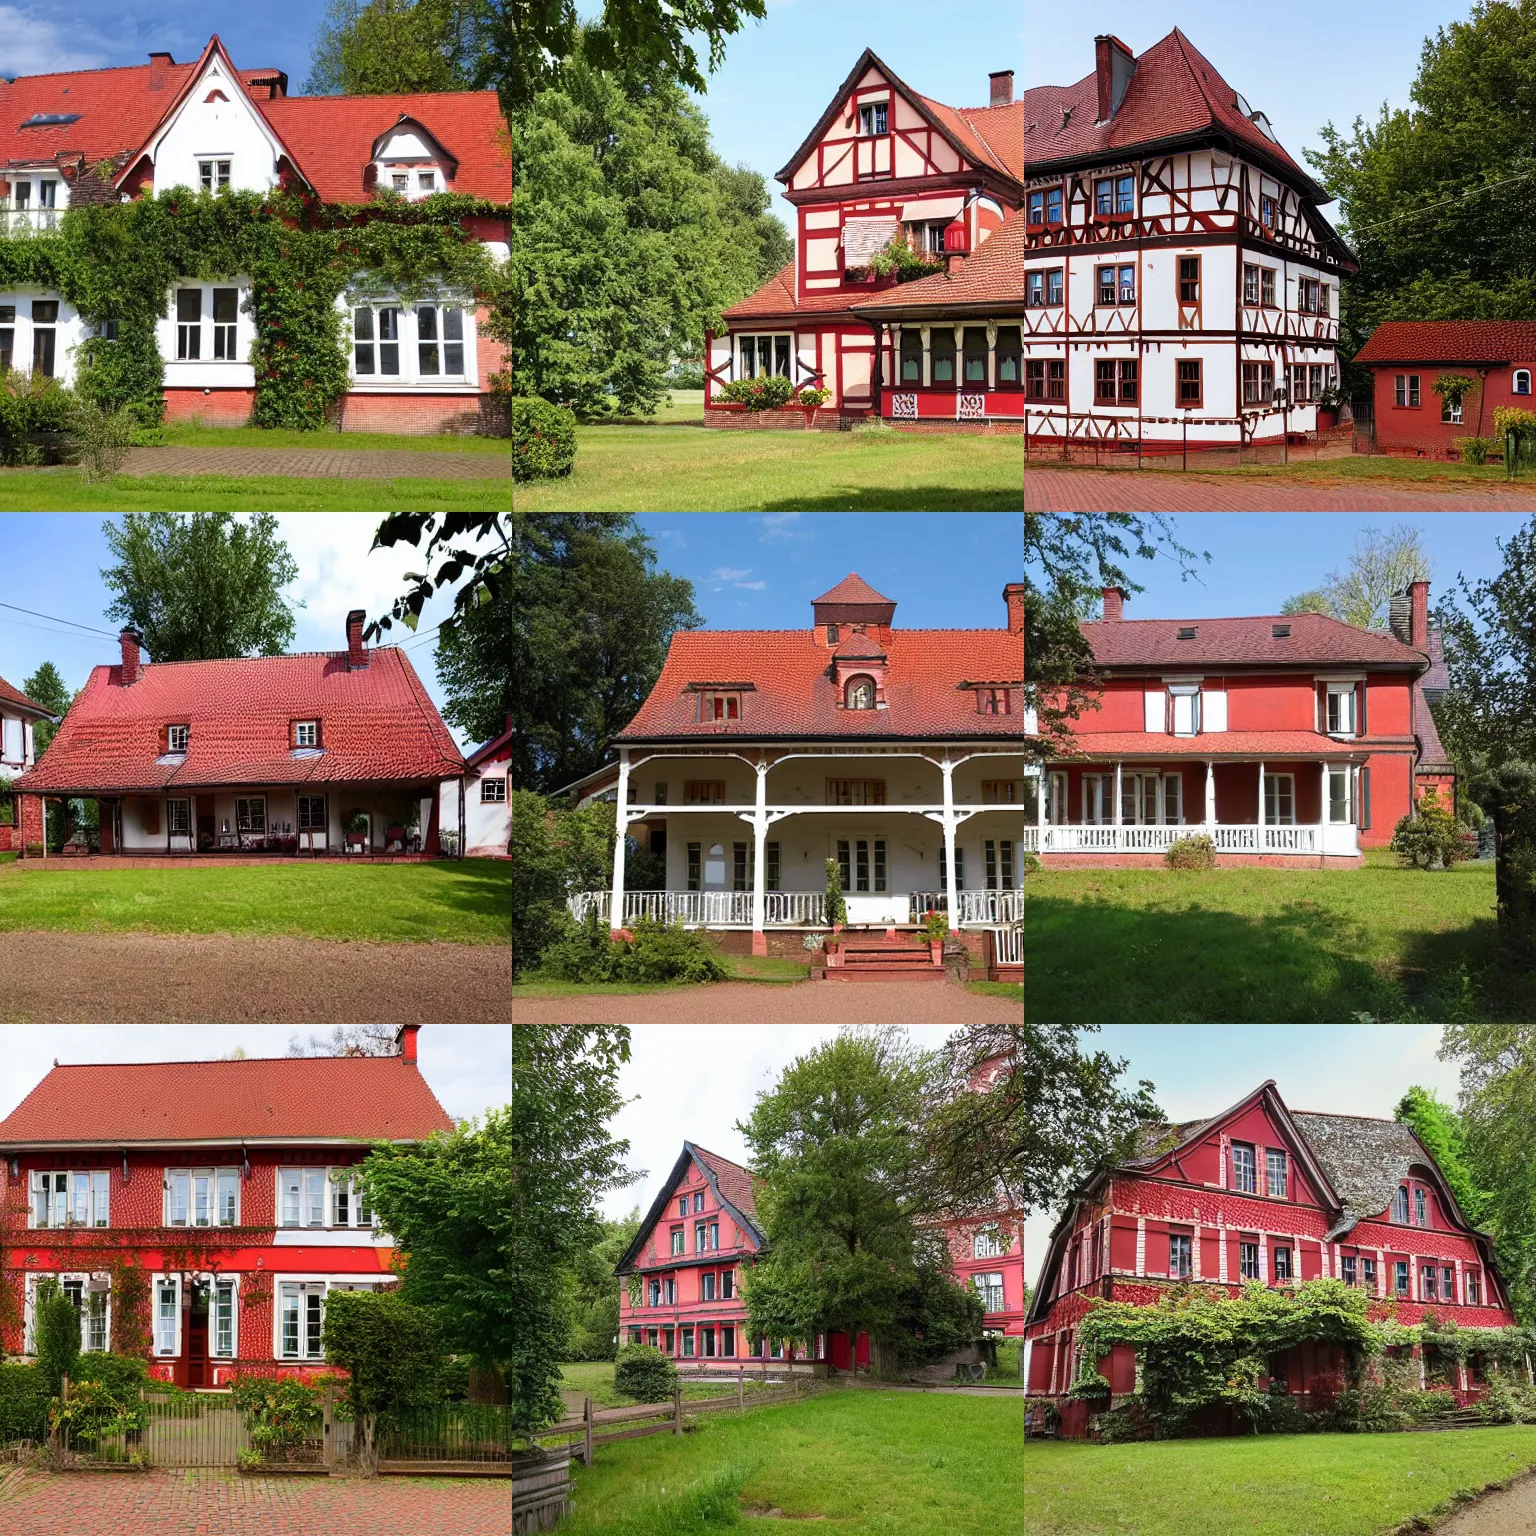 Prompt: 1 8 8 0 s big german farmhouse with veranda, red bricks, hannover, lower saxony